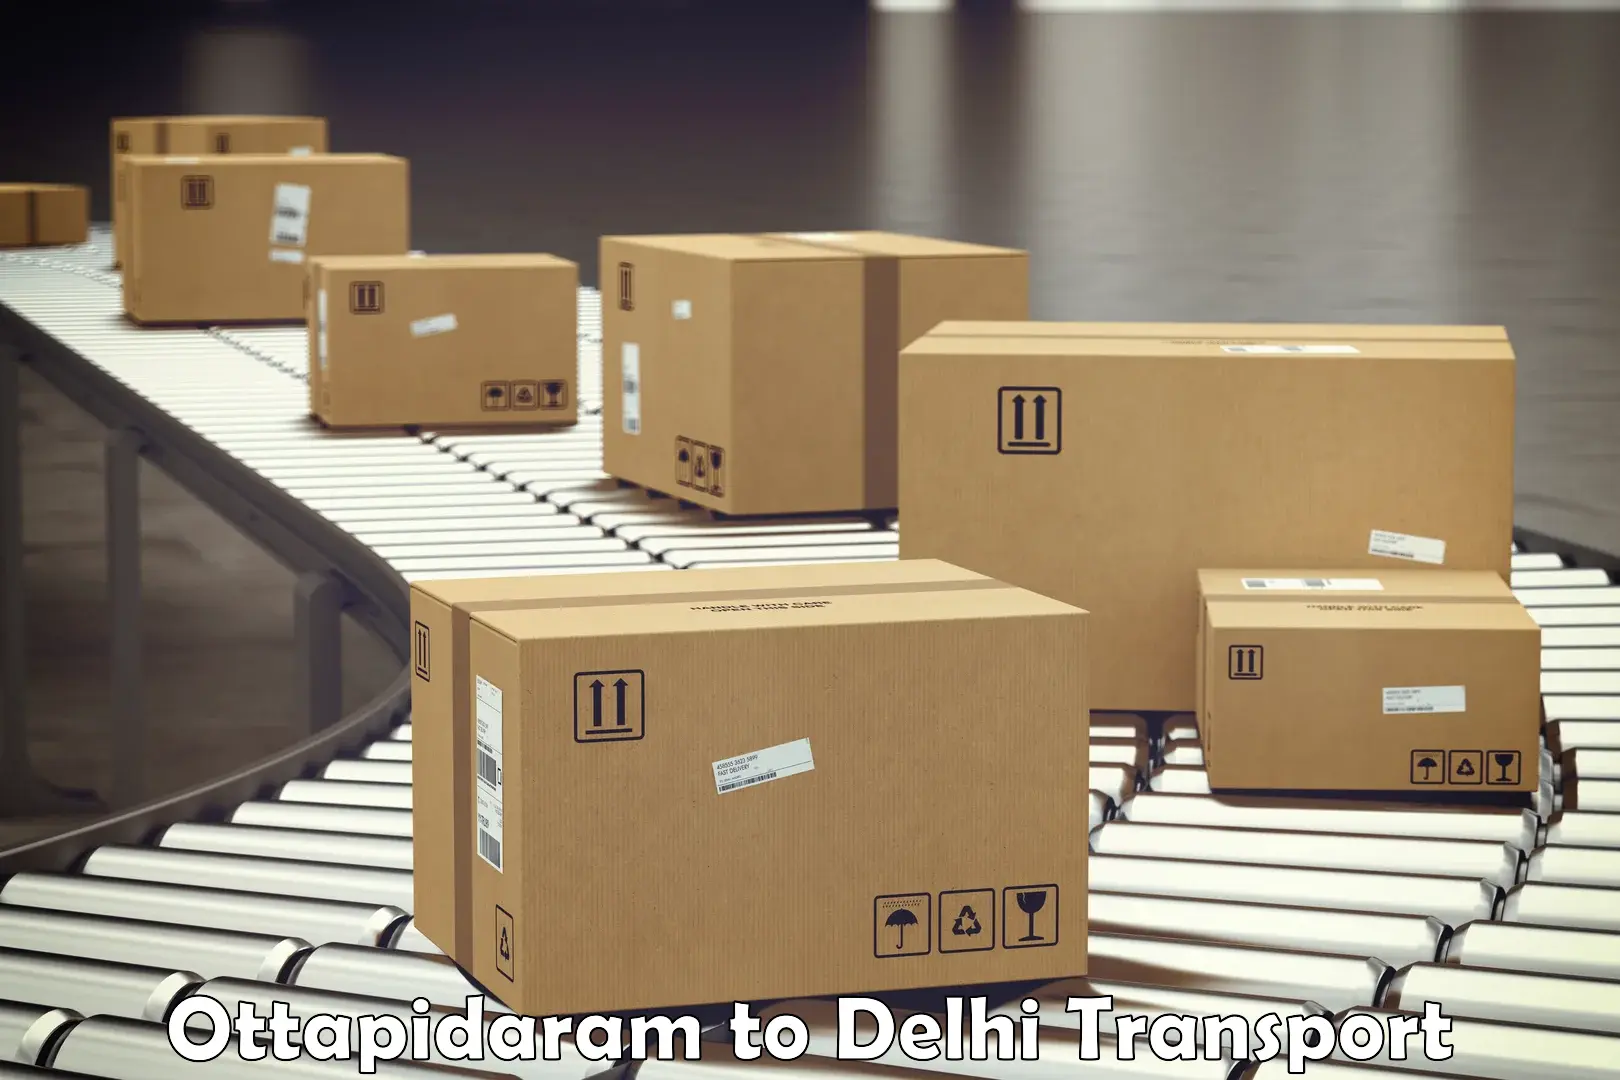 Two wheeler parcel service Ottapidaram to NIT Delhi